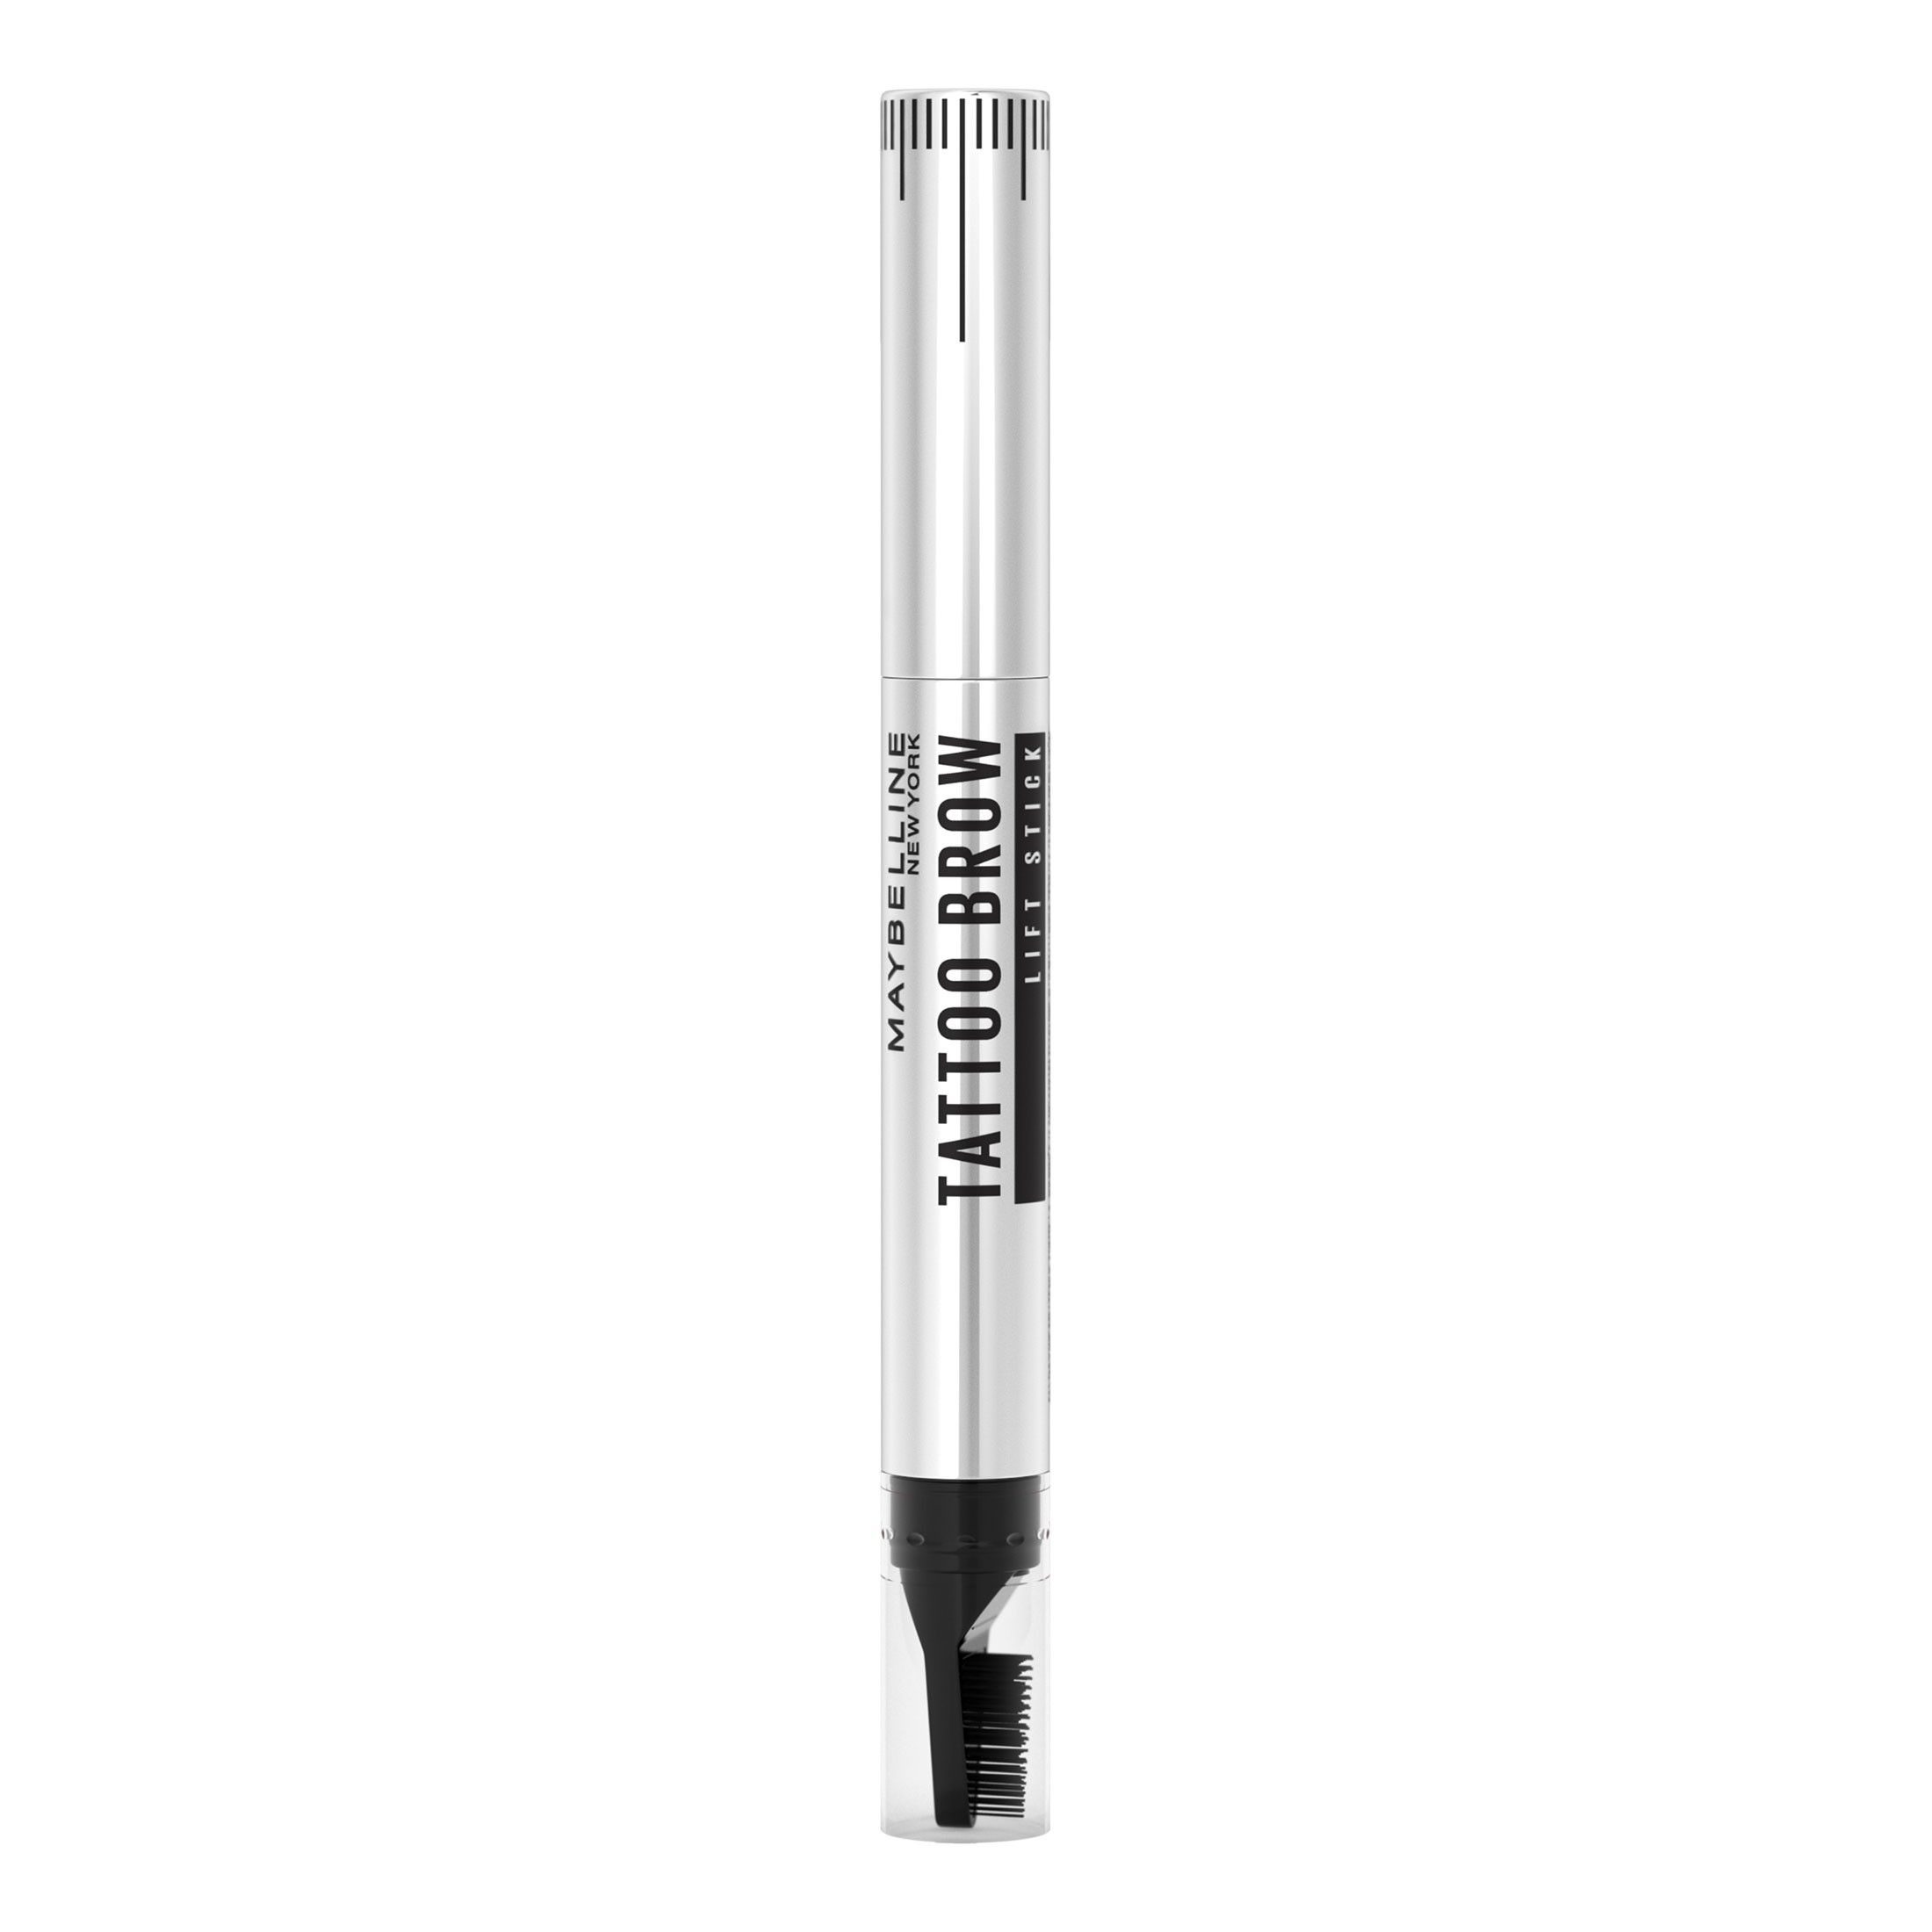 Augenbrauen-Stift - Tattoo Brow Lift Stick